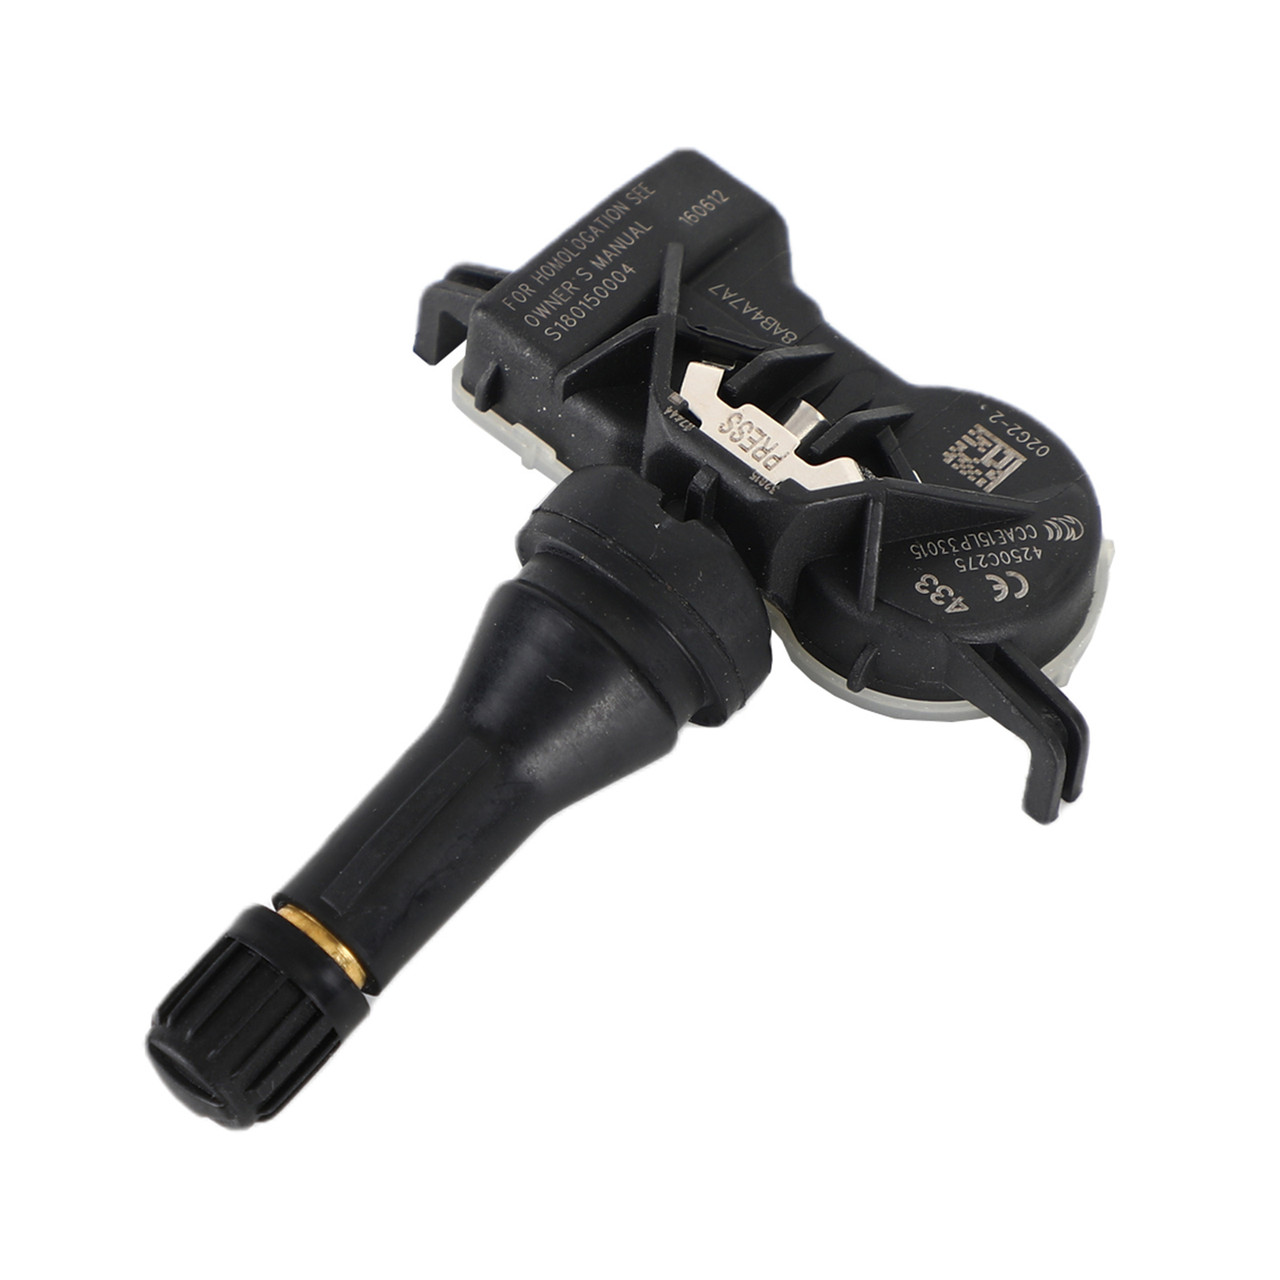 1x TPMS Tire Pressure Sensor 4250C275 Fit for Nissan A-Hatch 18-19 Black